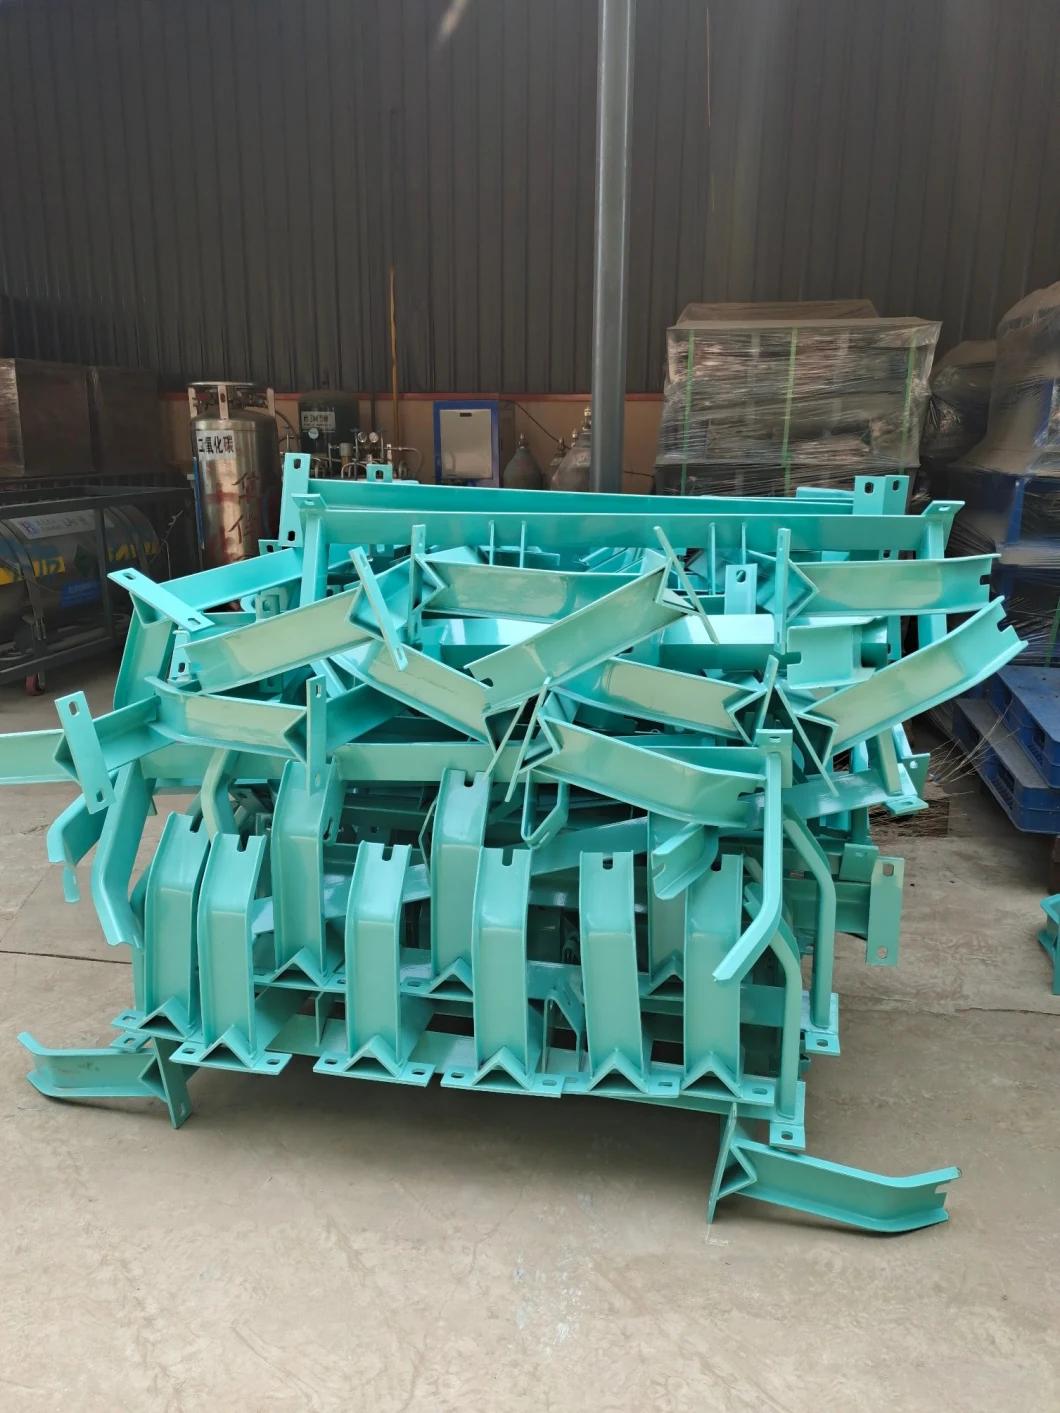 Belt Conveyor Troughing Idler Roller Support Bracket Frames for Lime Stone Plant Energy & Mining 10° 20° 30° 35° 45°